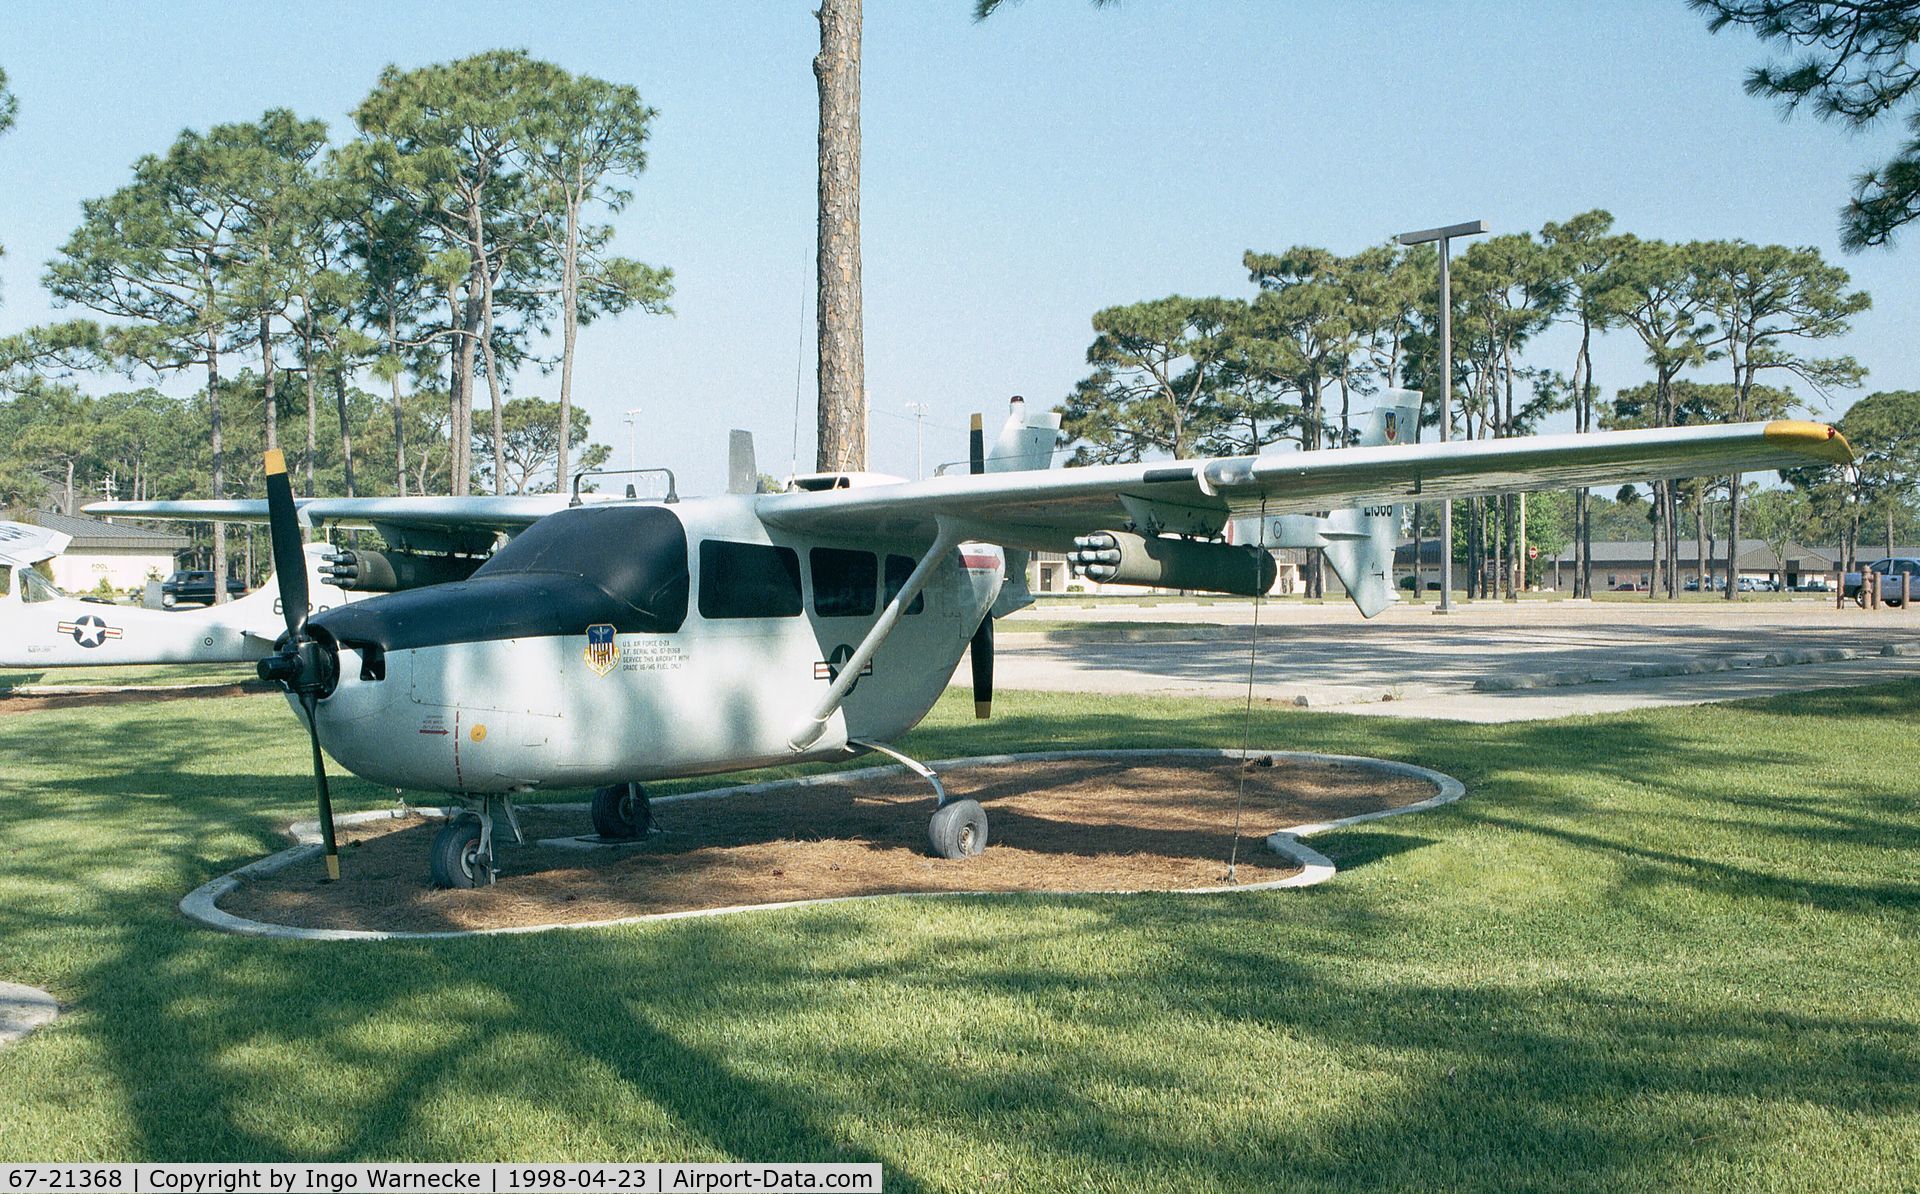 67-21368, 1967 Cessna O-2A Super Skymaster Super Skymaster C/N 337M-0074, Cessna O-2A Super Skymaster of USAF at Hurlburt Field historic aircraft park